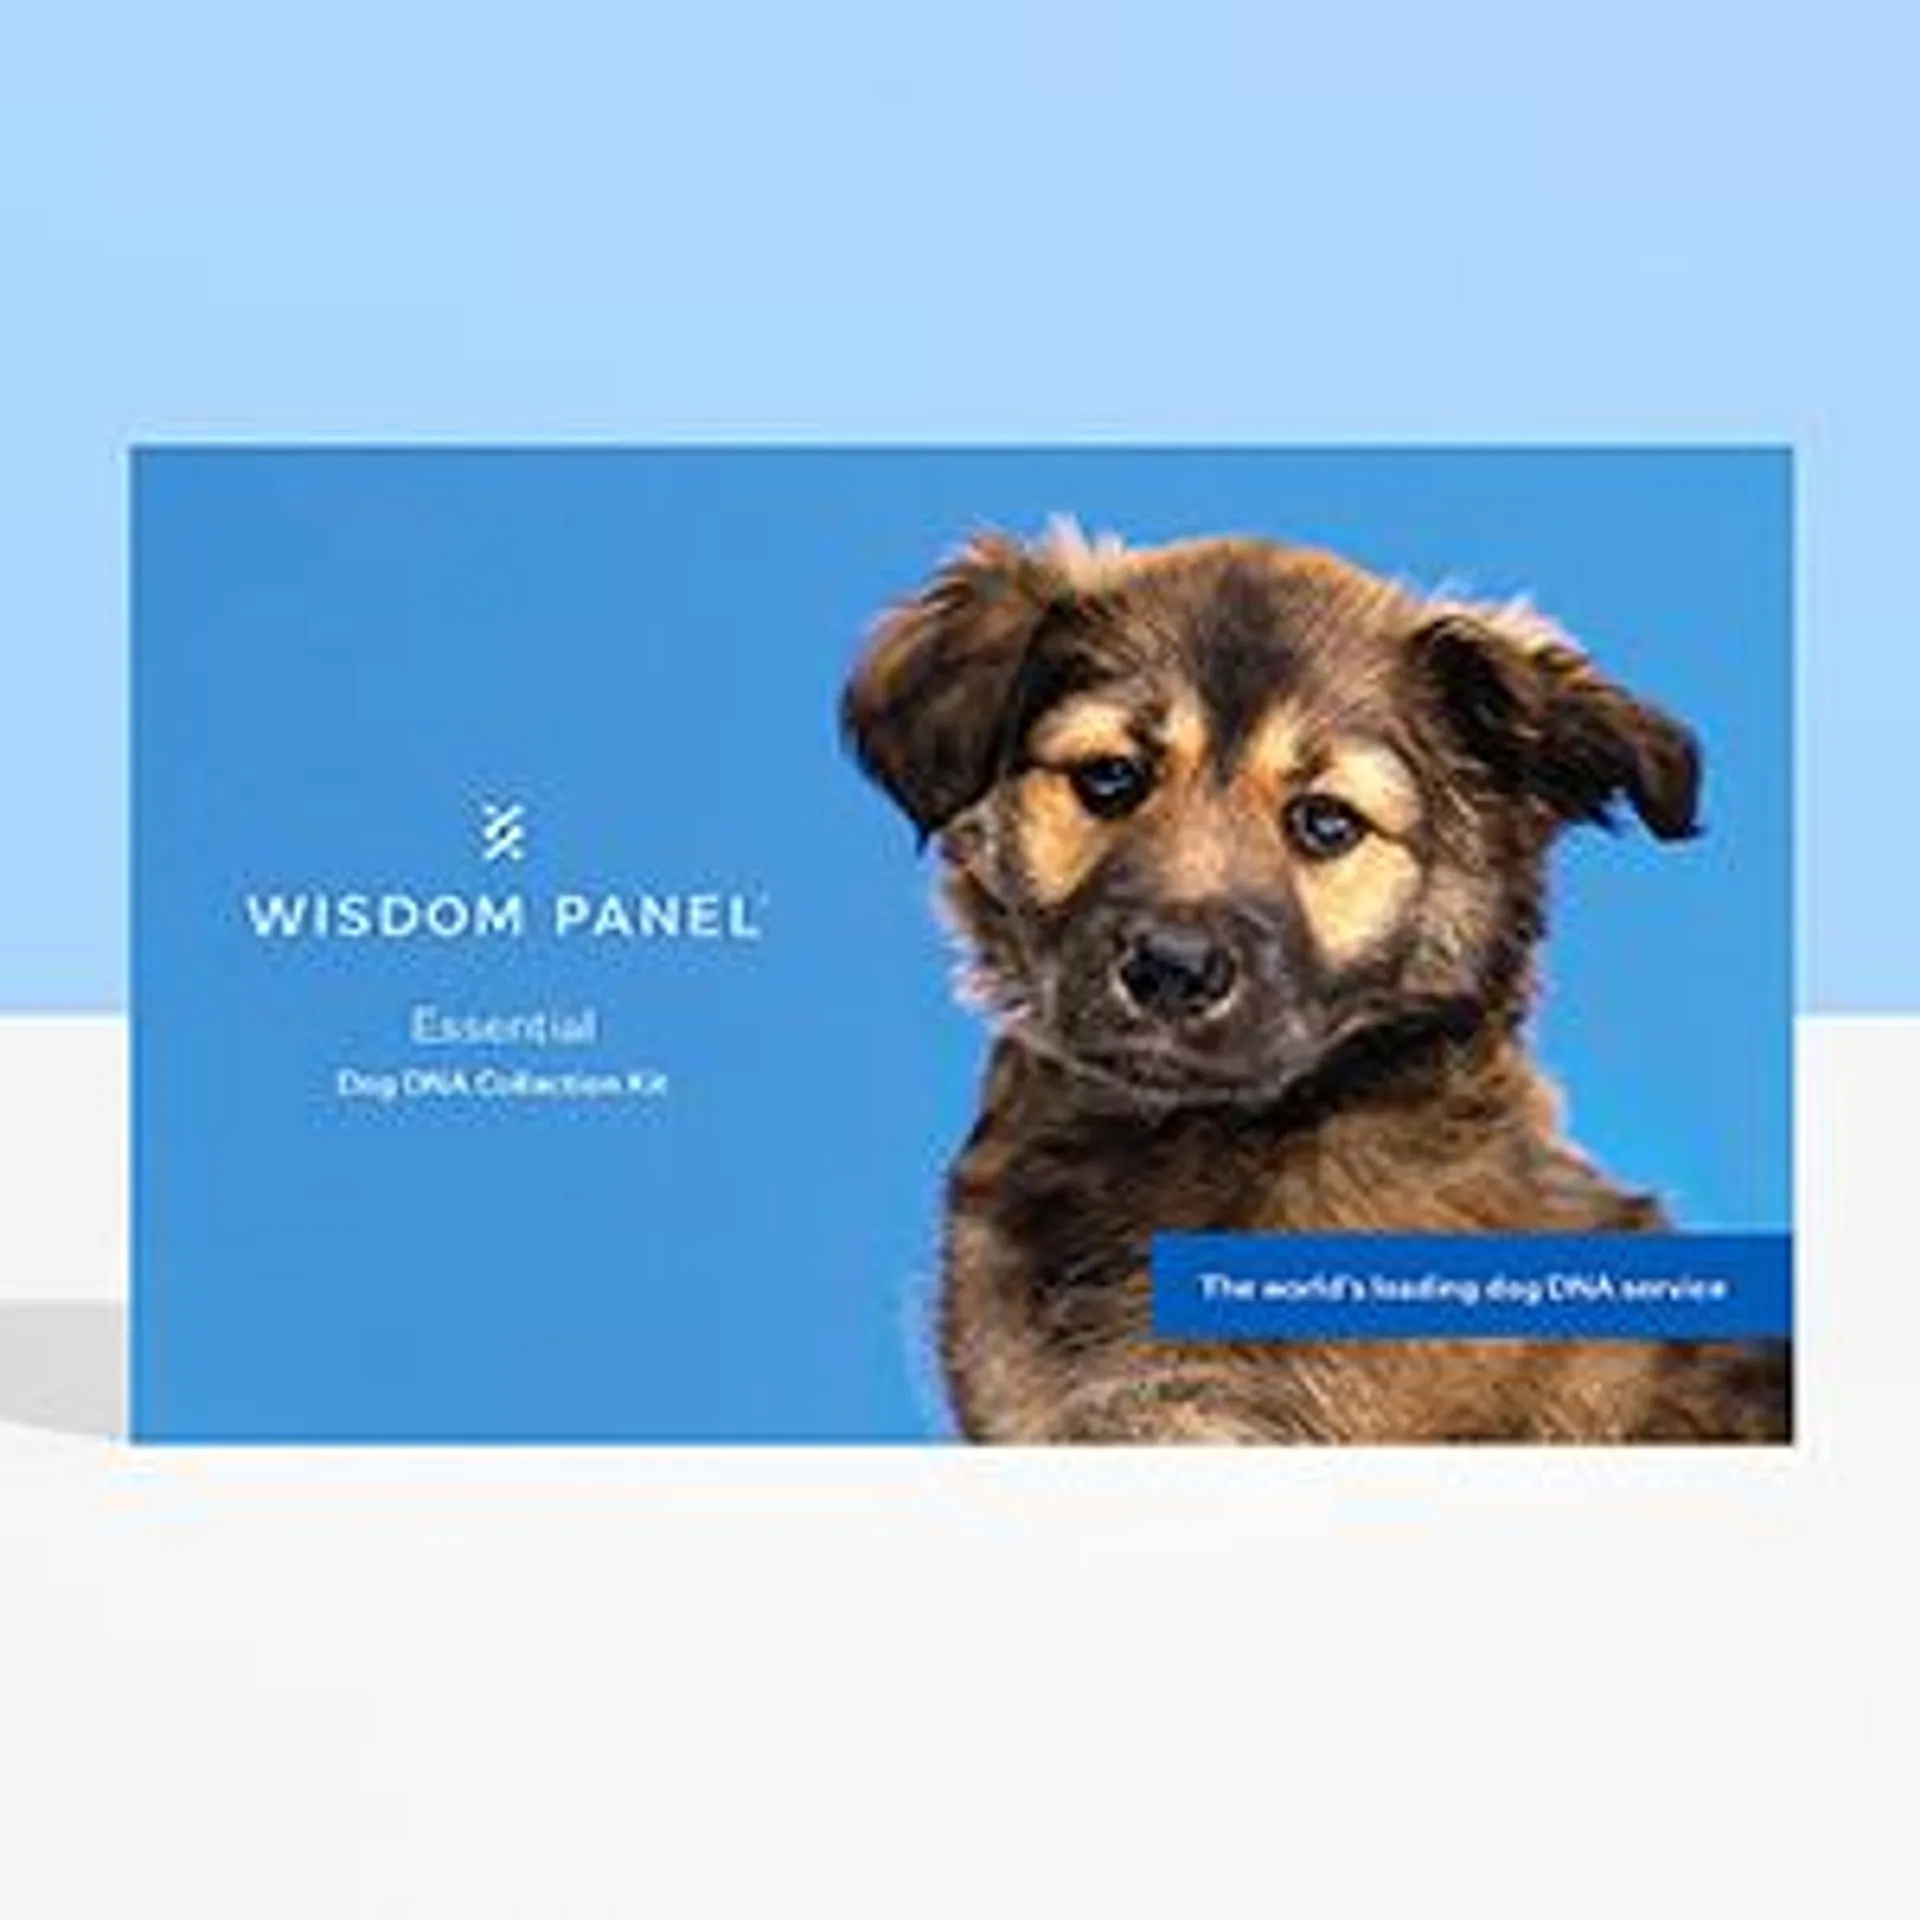 Wisdom Panel Essential Dog DNA Test